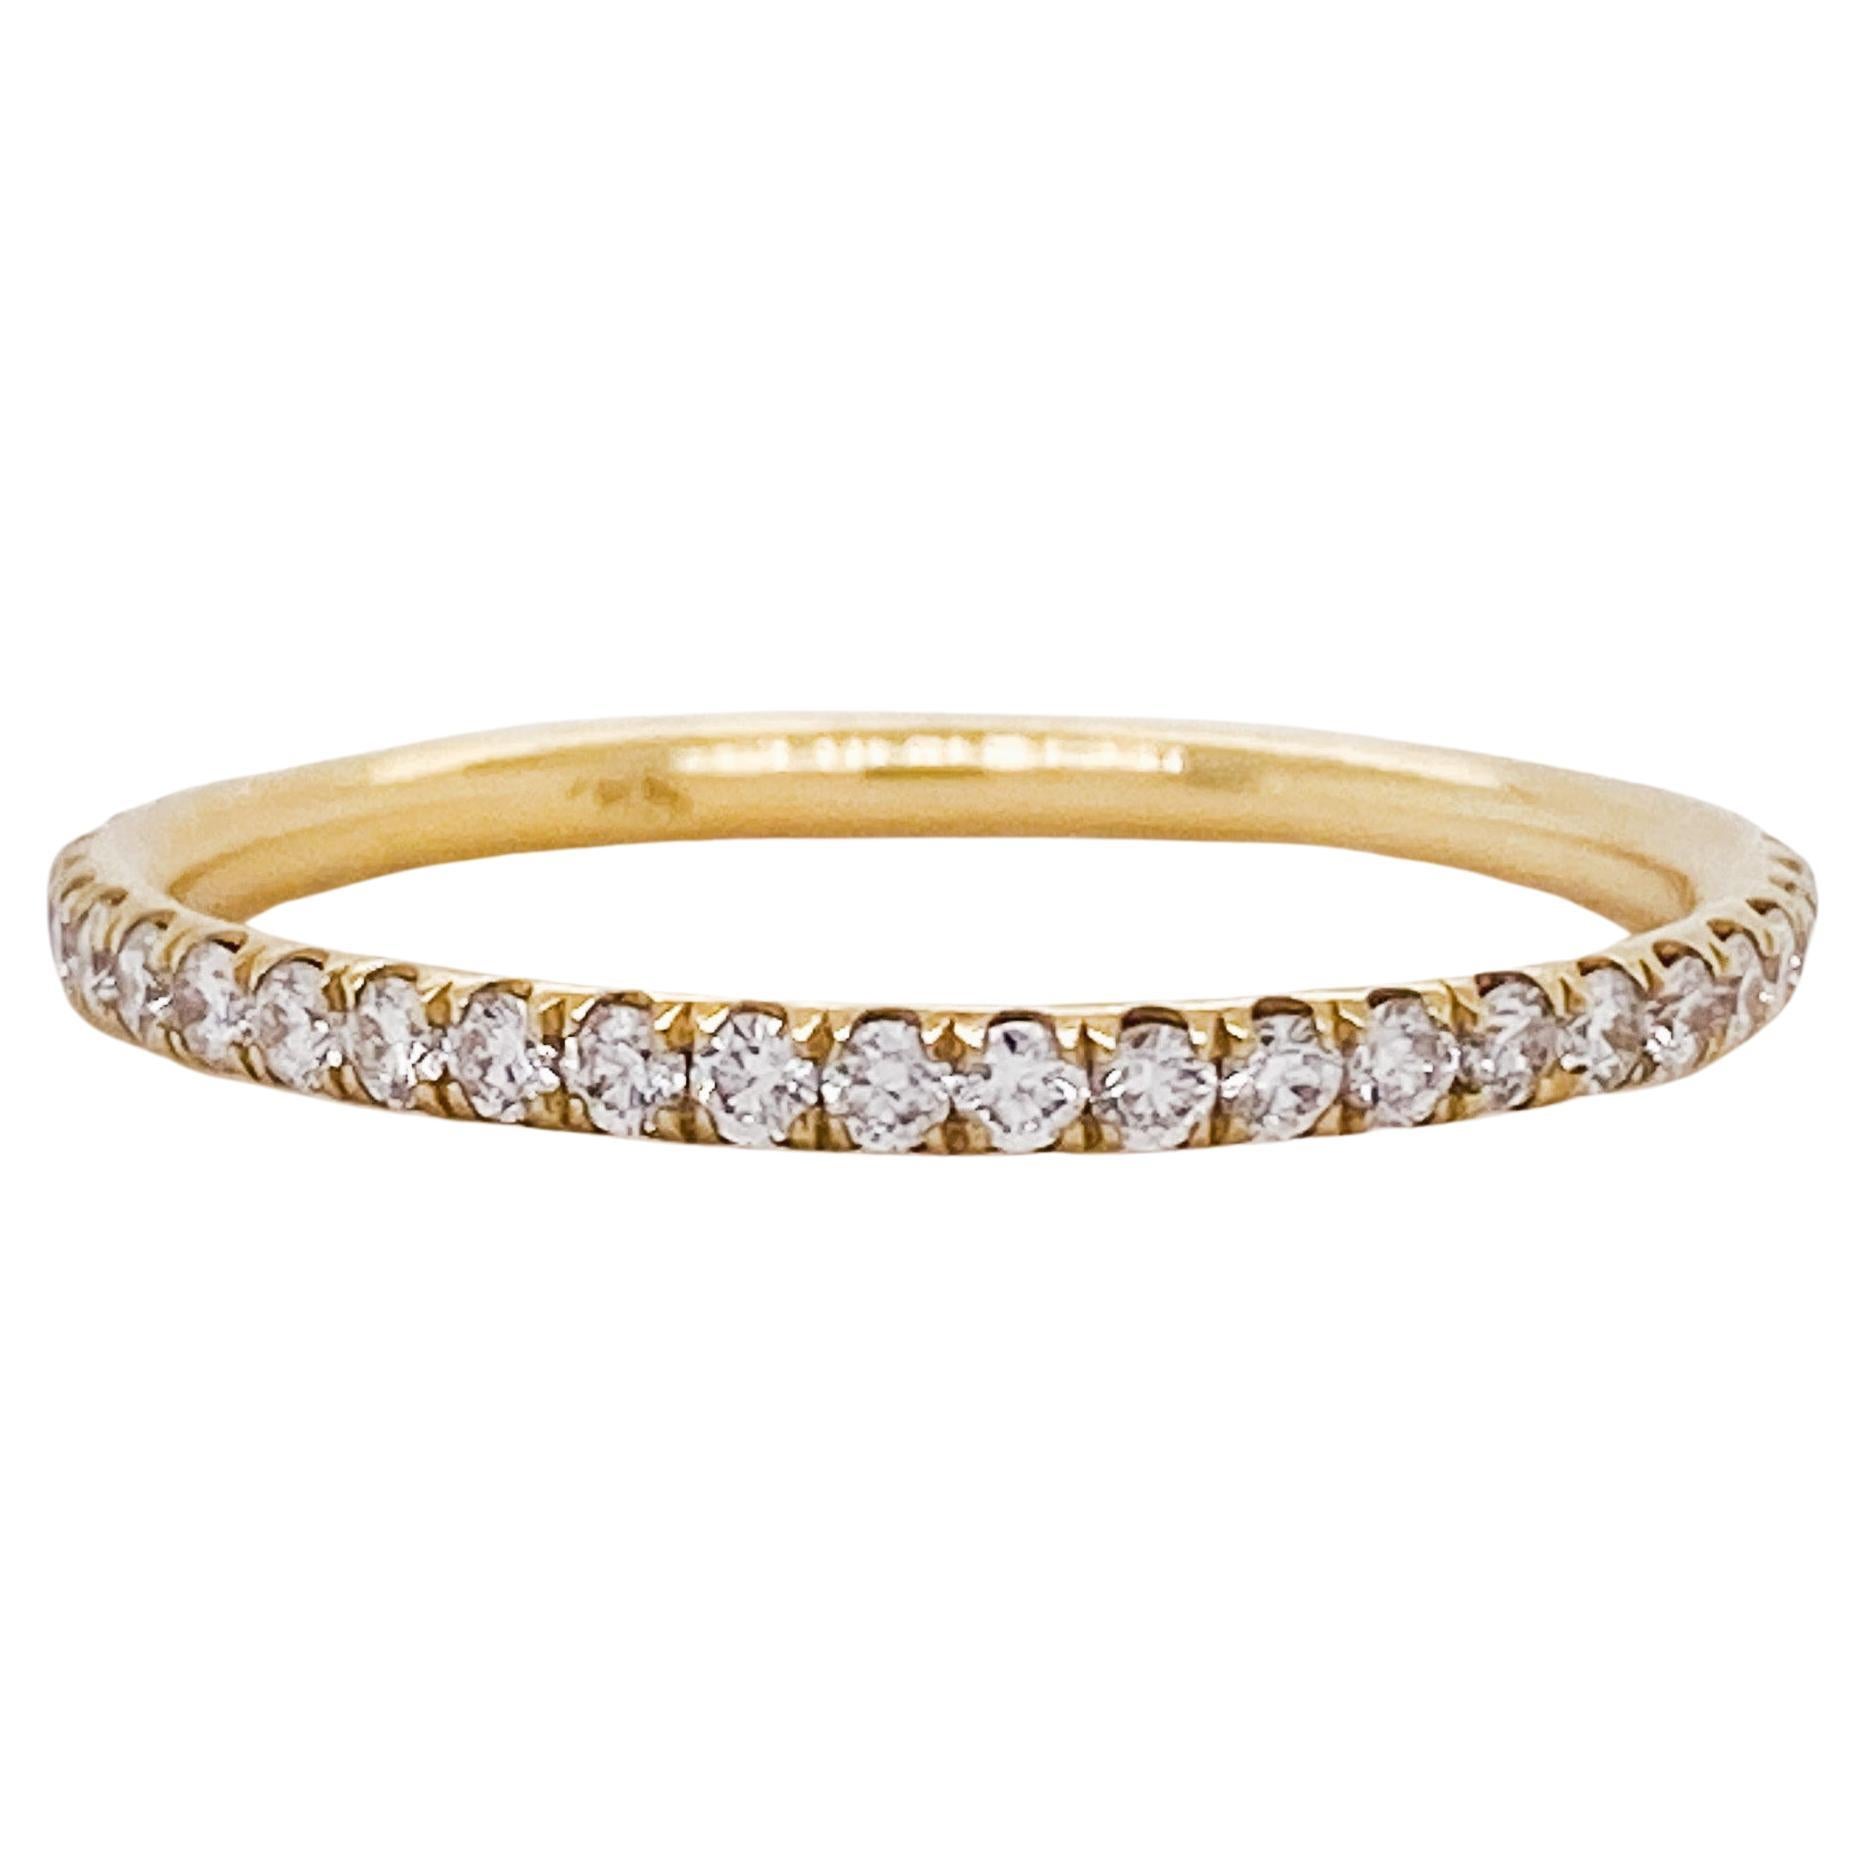 Eternity Diamond Ring Slender 18K Yellow Gold, 1/2 Carat Diamonds, 0.52 Carats For Sale